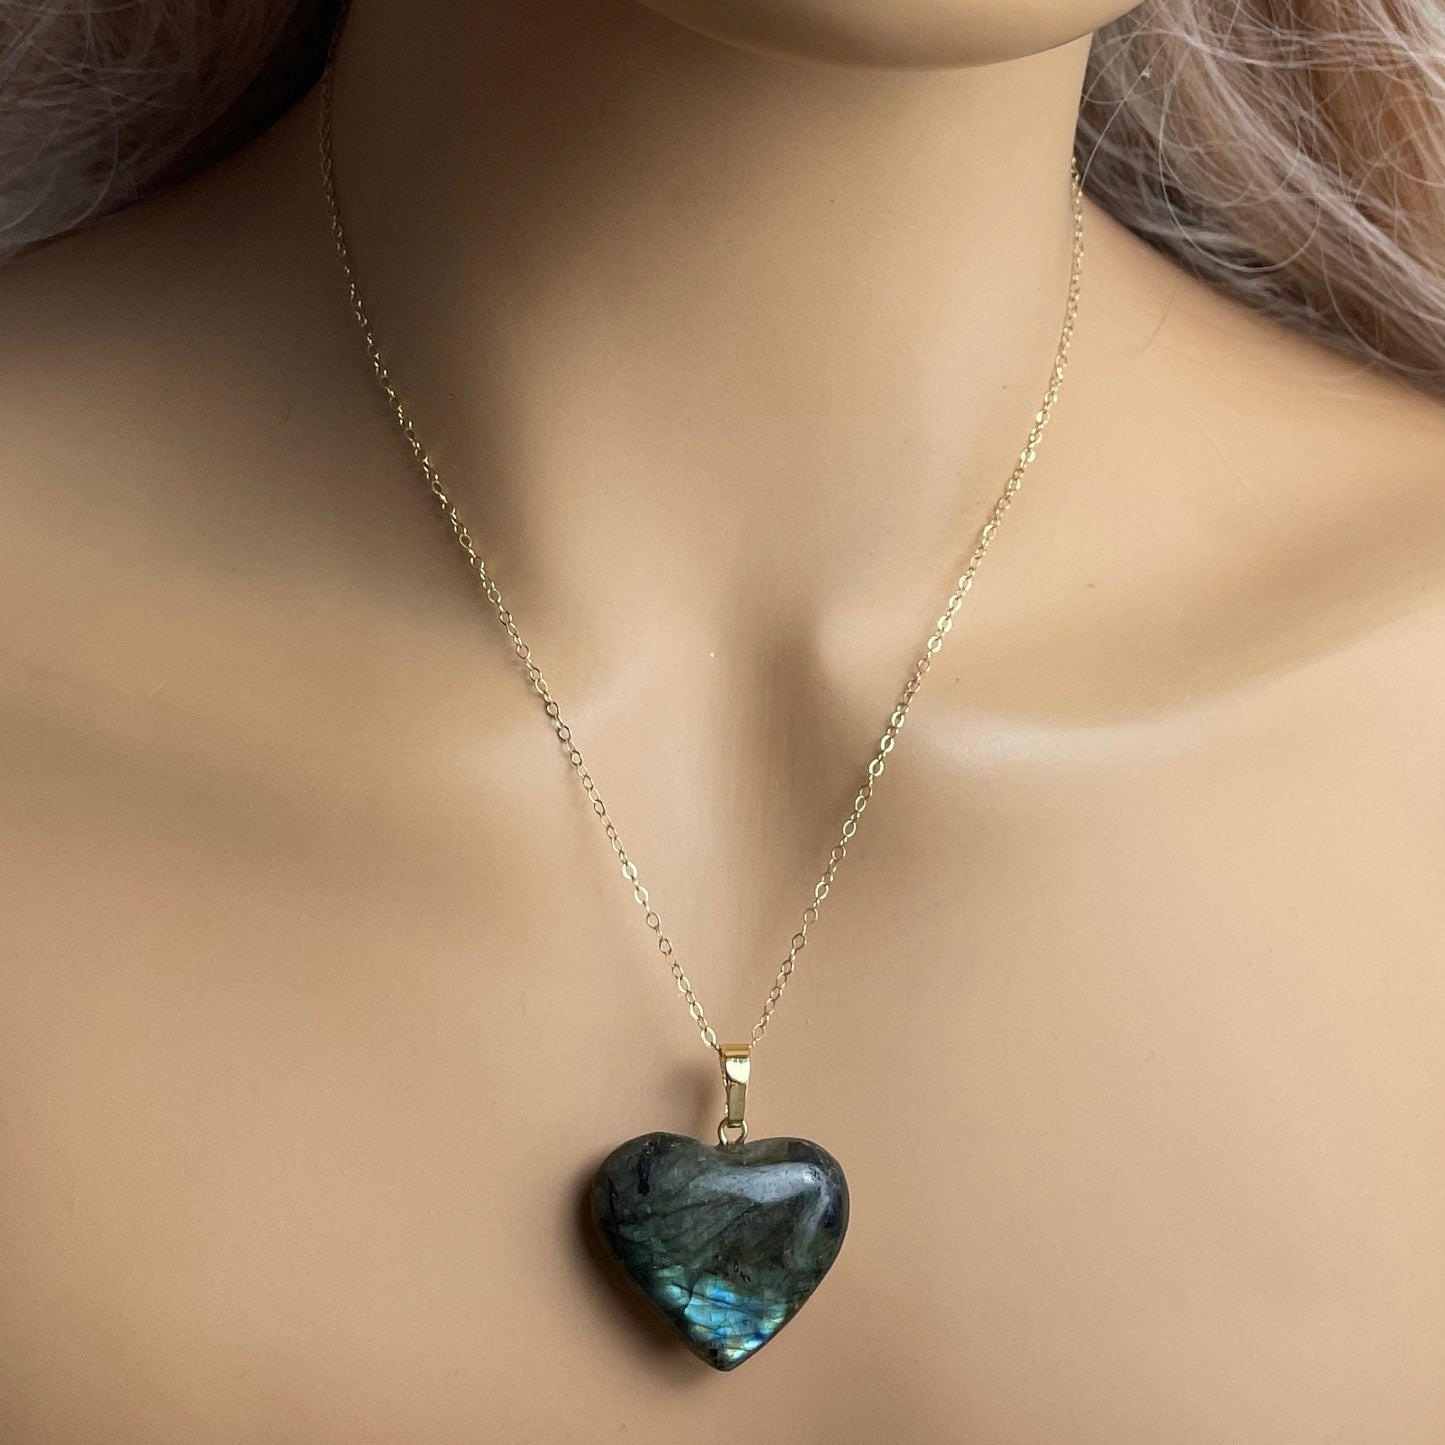 Crystal Heart Pendant Necklace Gold, Labradorite Gemstone, Blue Flash Gray Crystal Pendant, Gift Women, M7-29